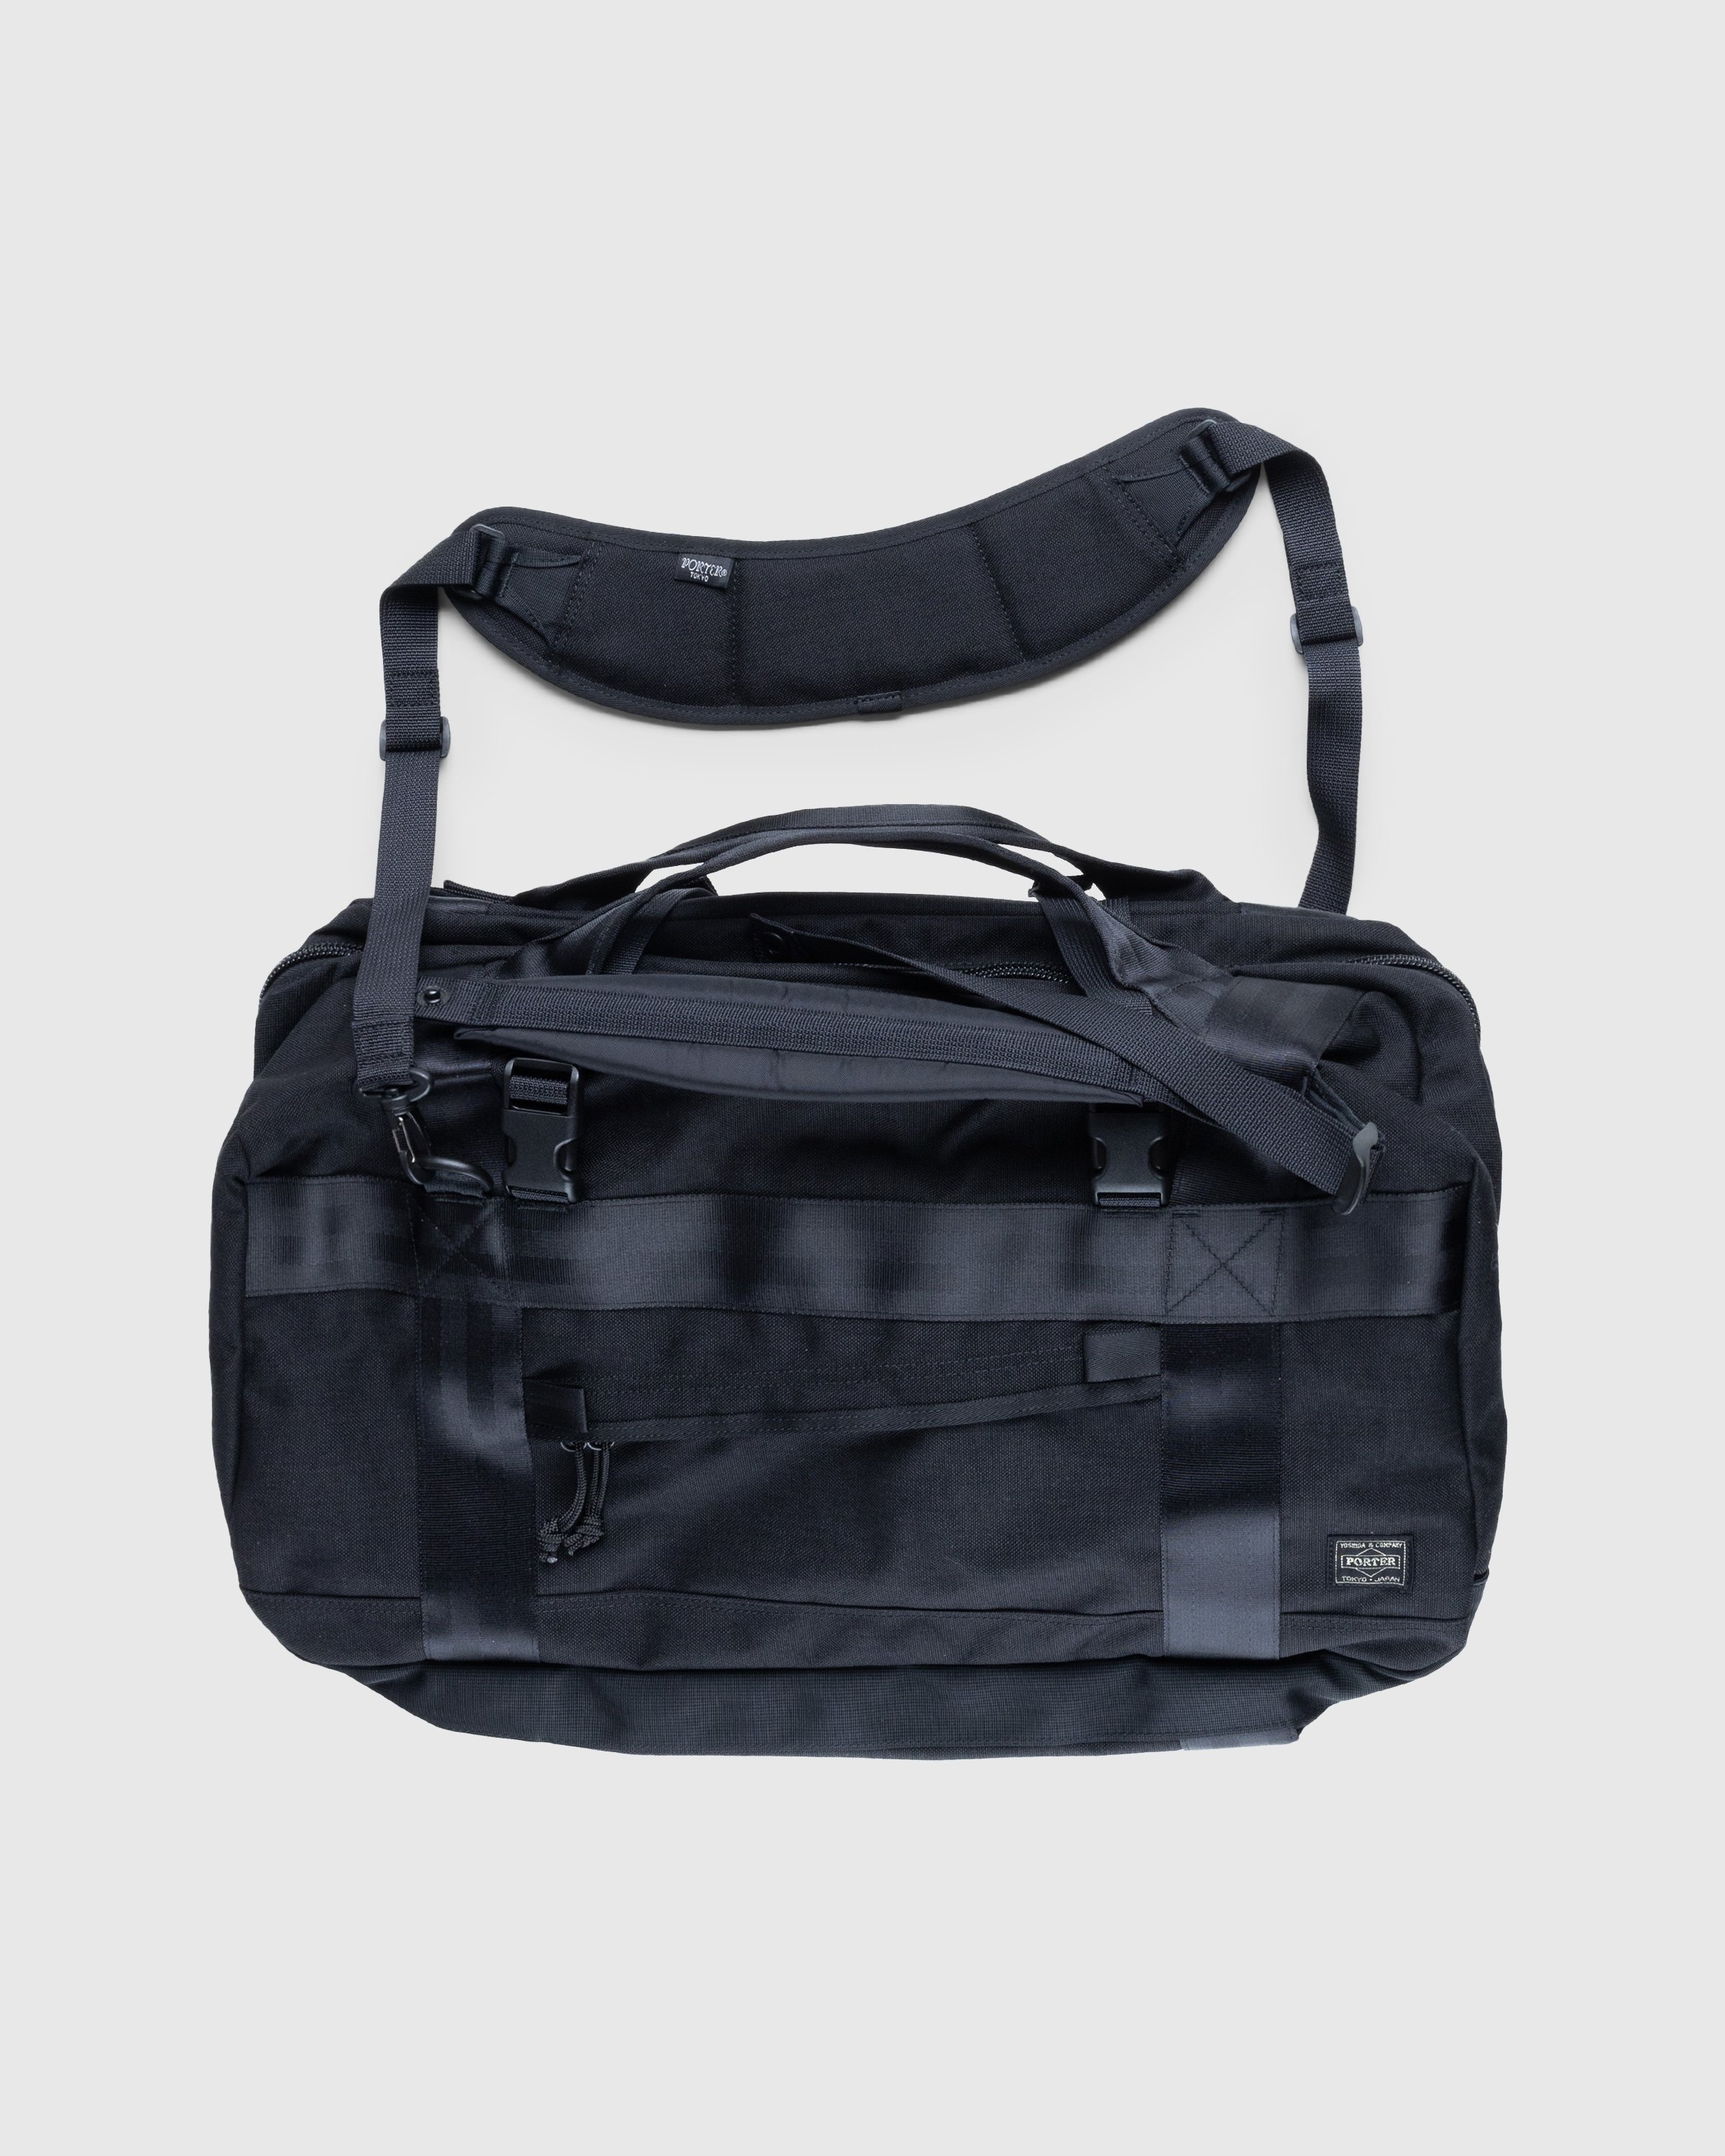 Porter-Yoshida & Co. – Booth Pack 3-Way Duffle Bag Black